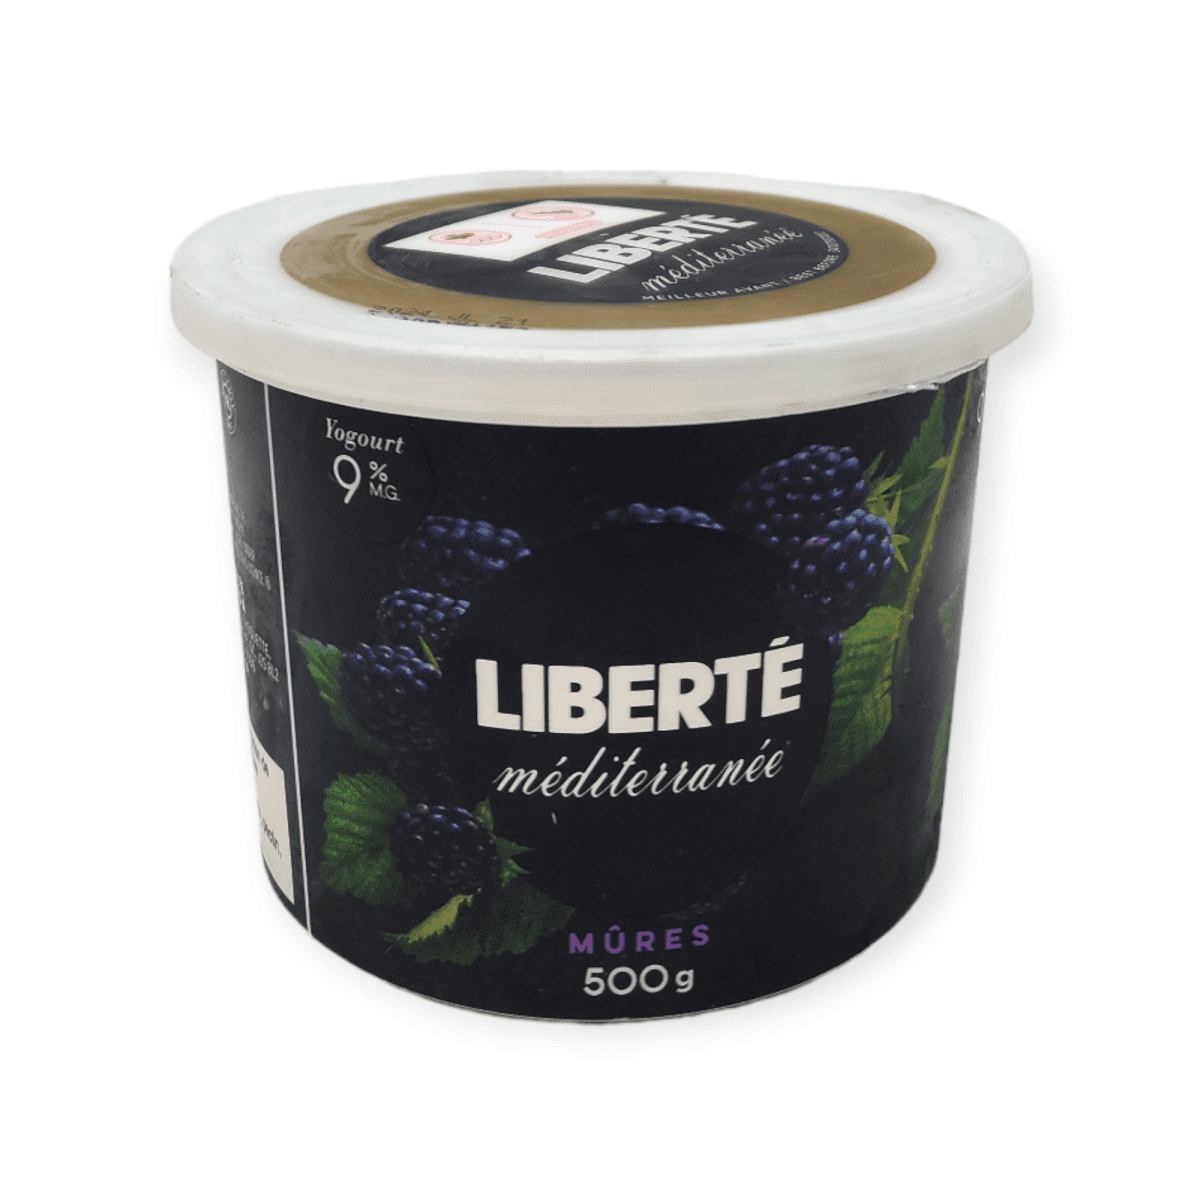 Liberte Mediterranee Yogurt 9% Blackberry (500g)